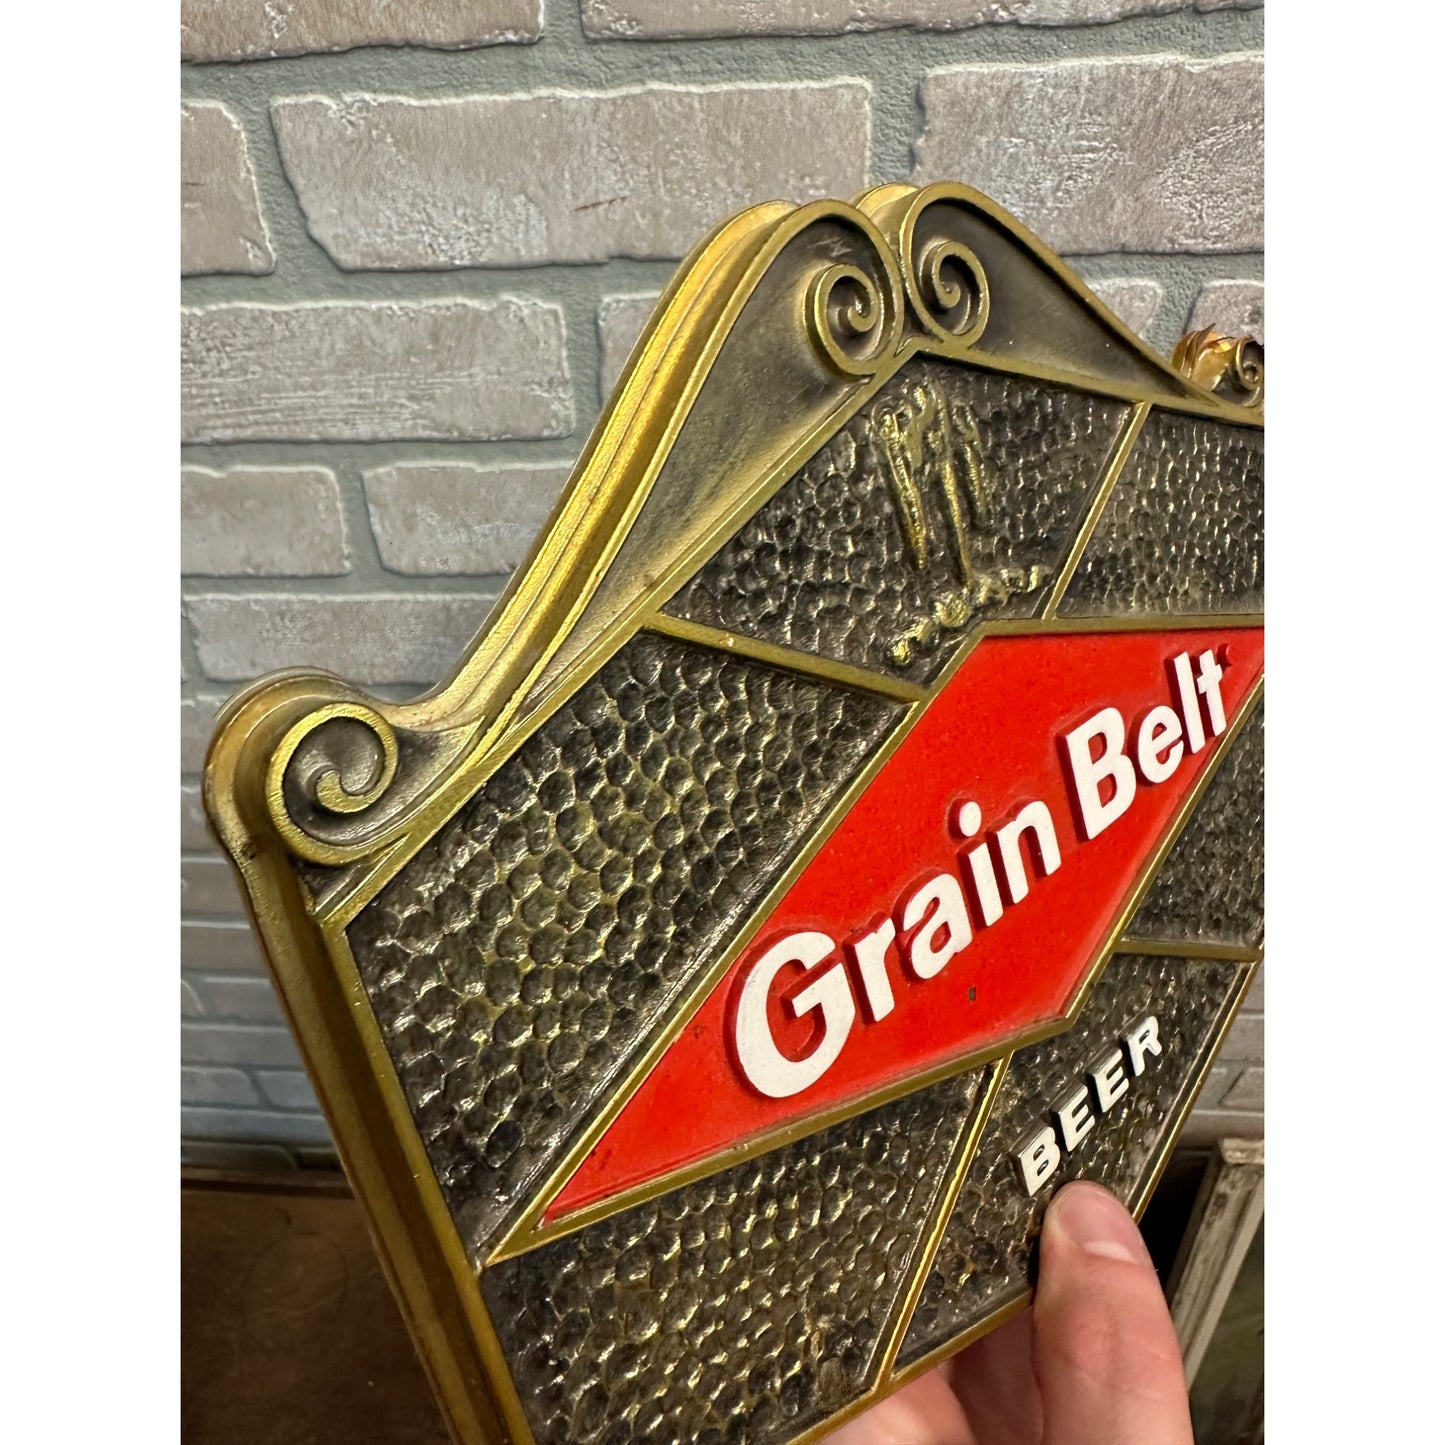 Vintage 1960s Grain Belt Beer Molded Plastic Sign - As-Is